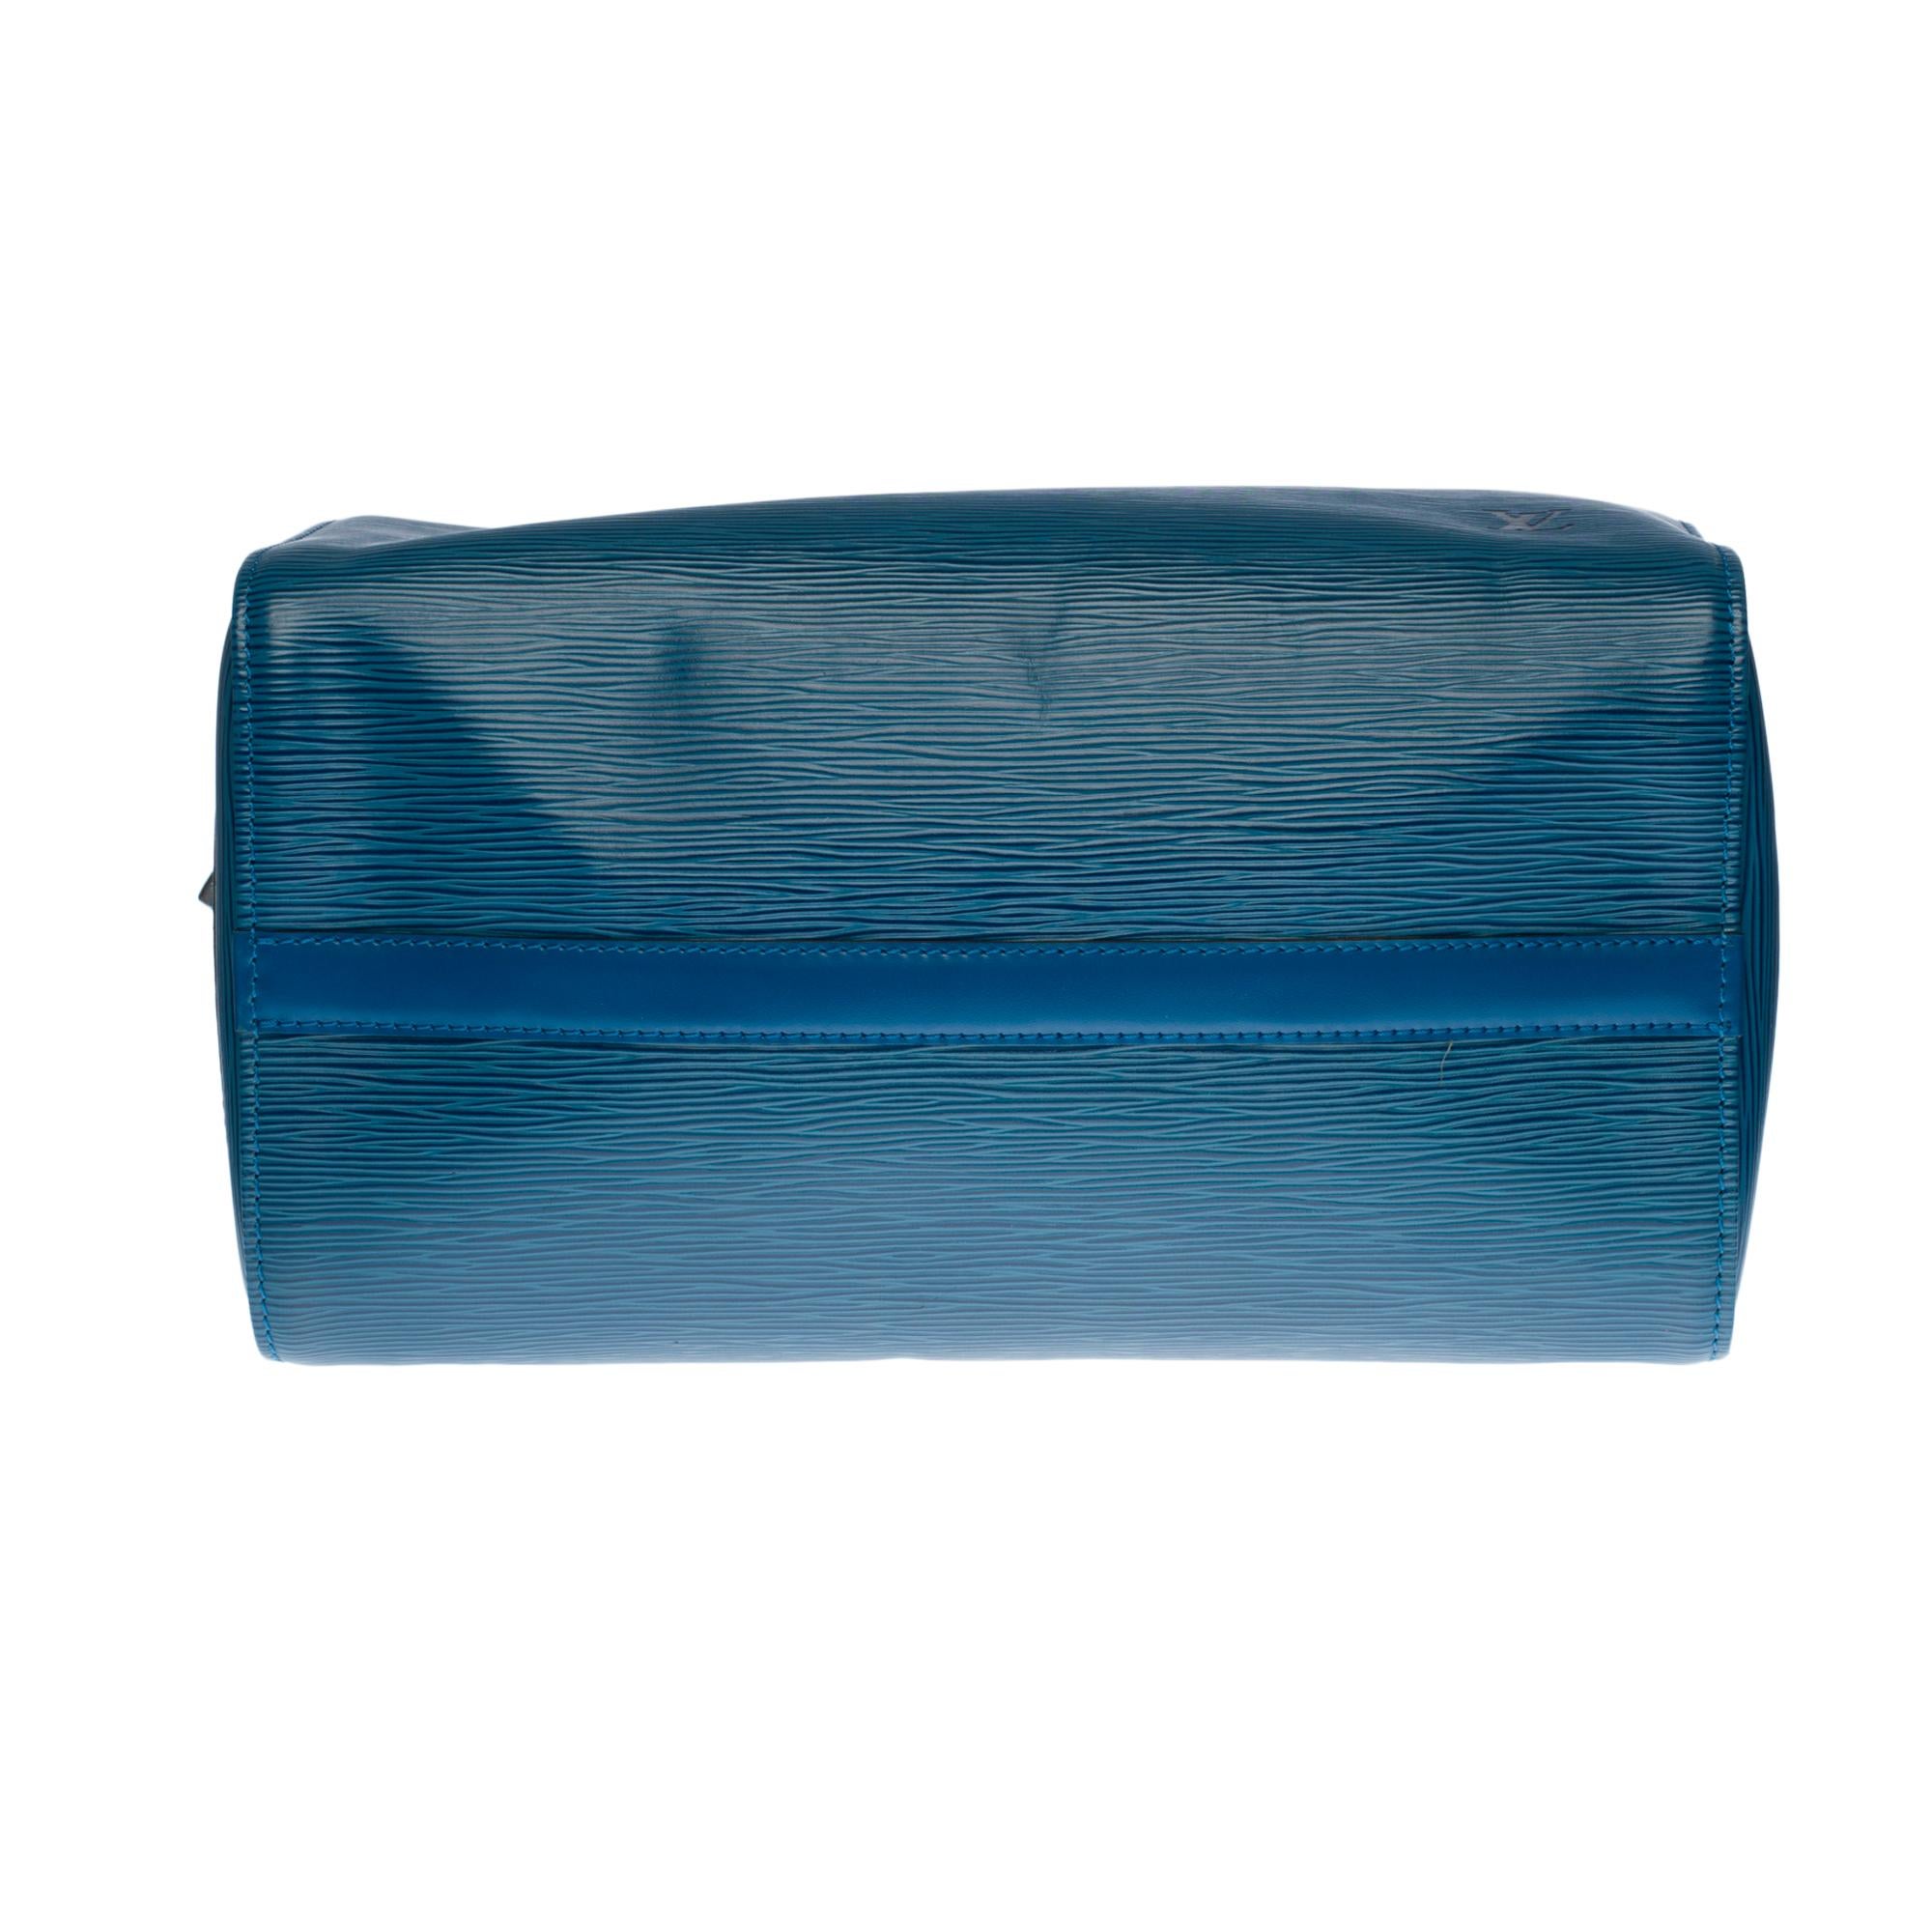 Louis Vuitton Speedy 30 handbag in blue épi leather and gold hardware 4